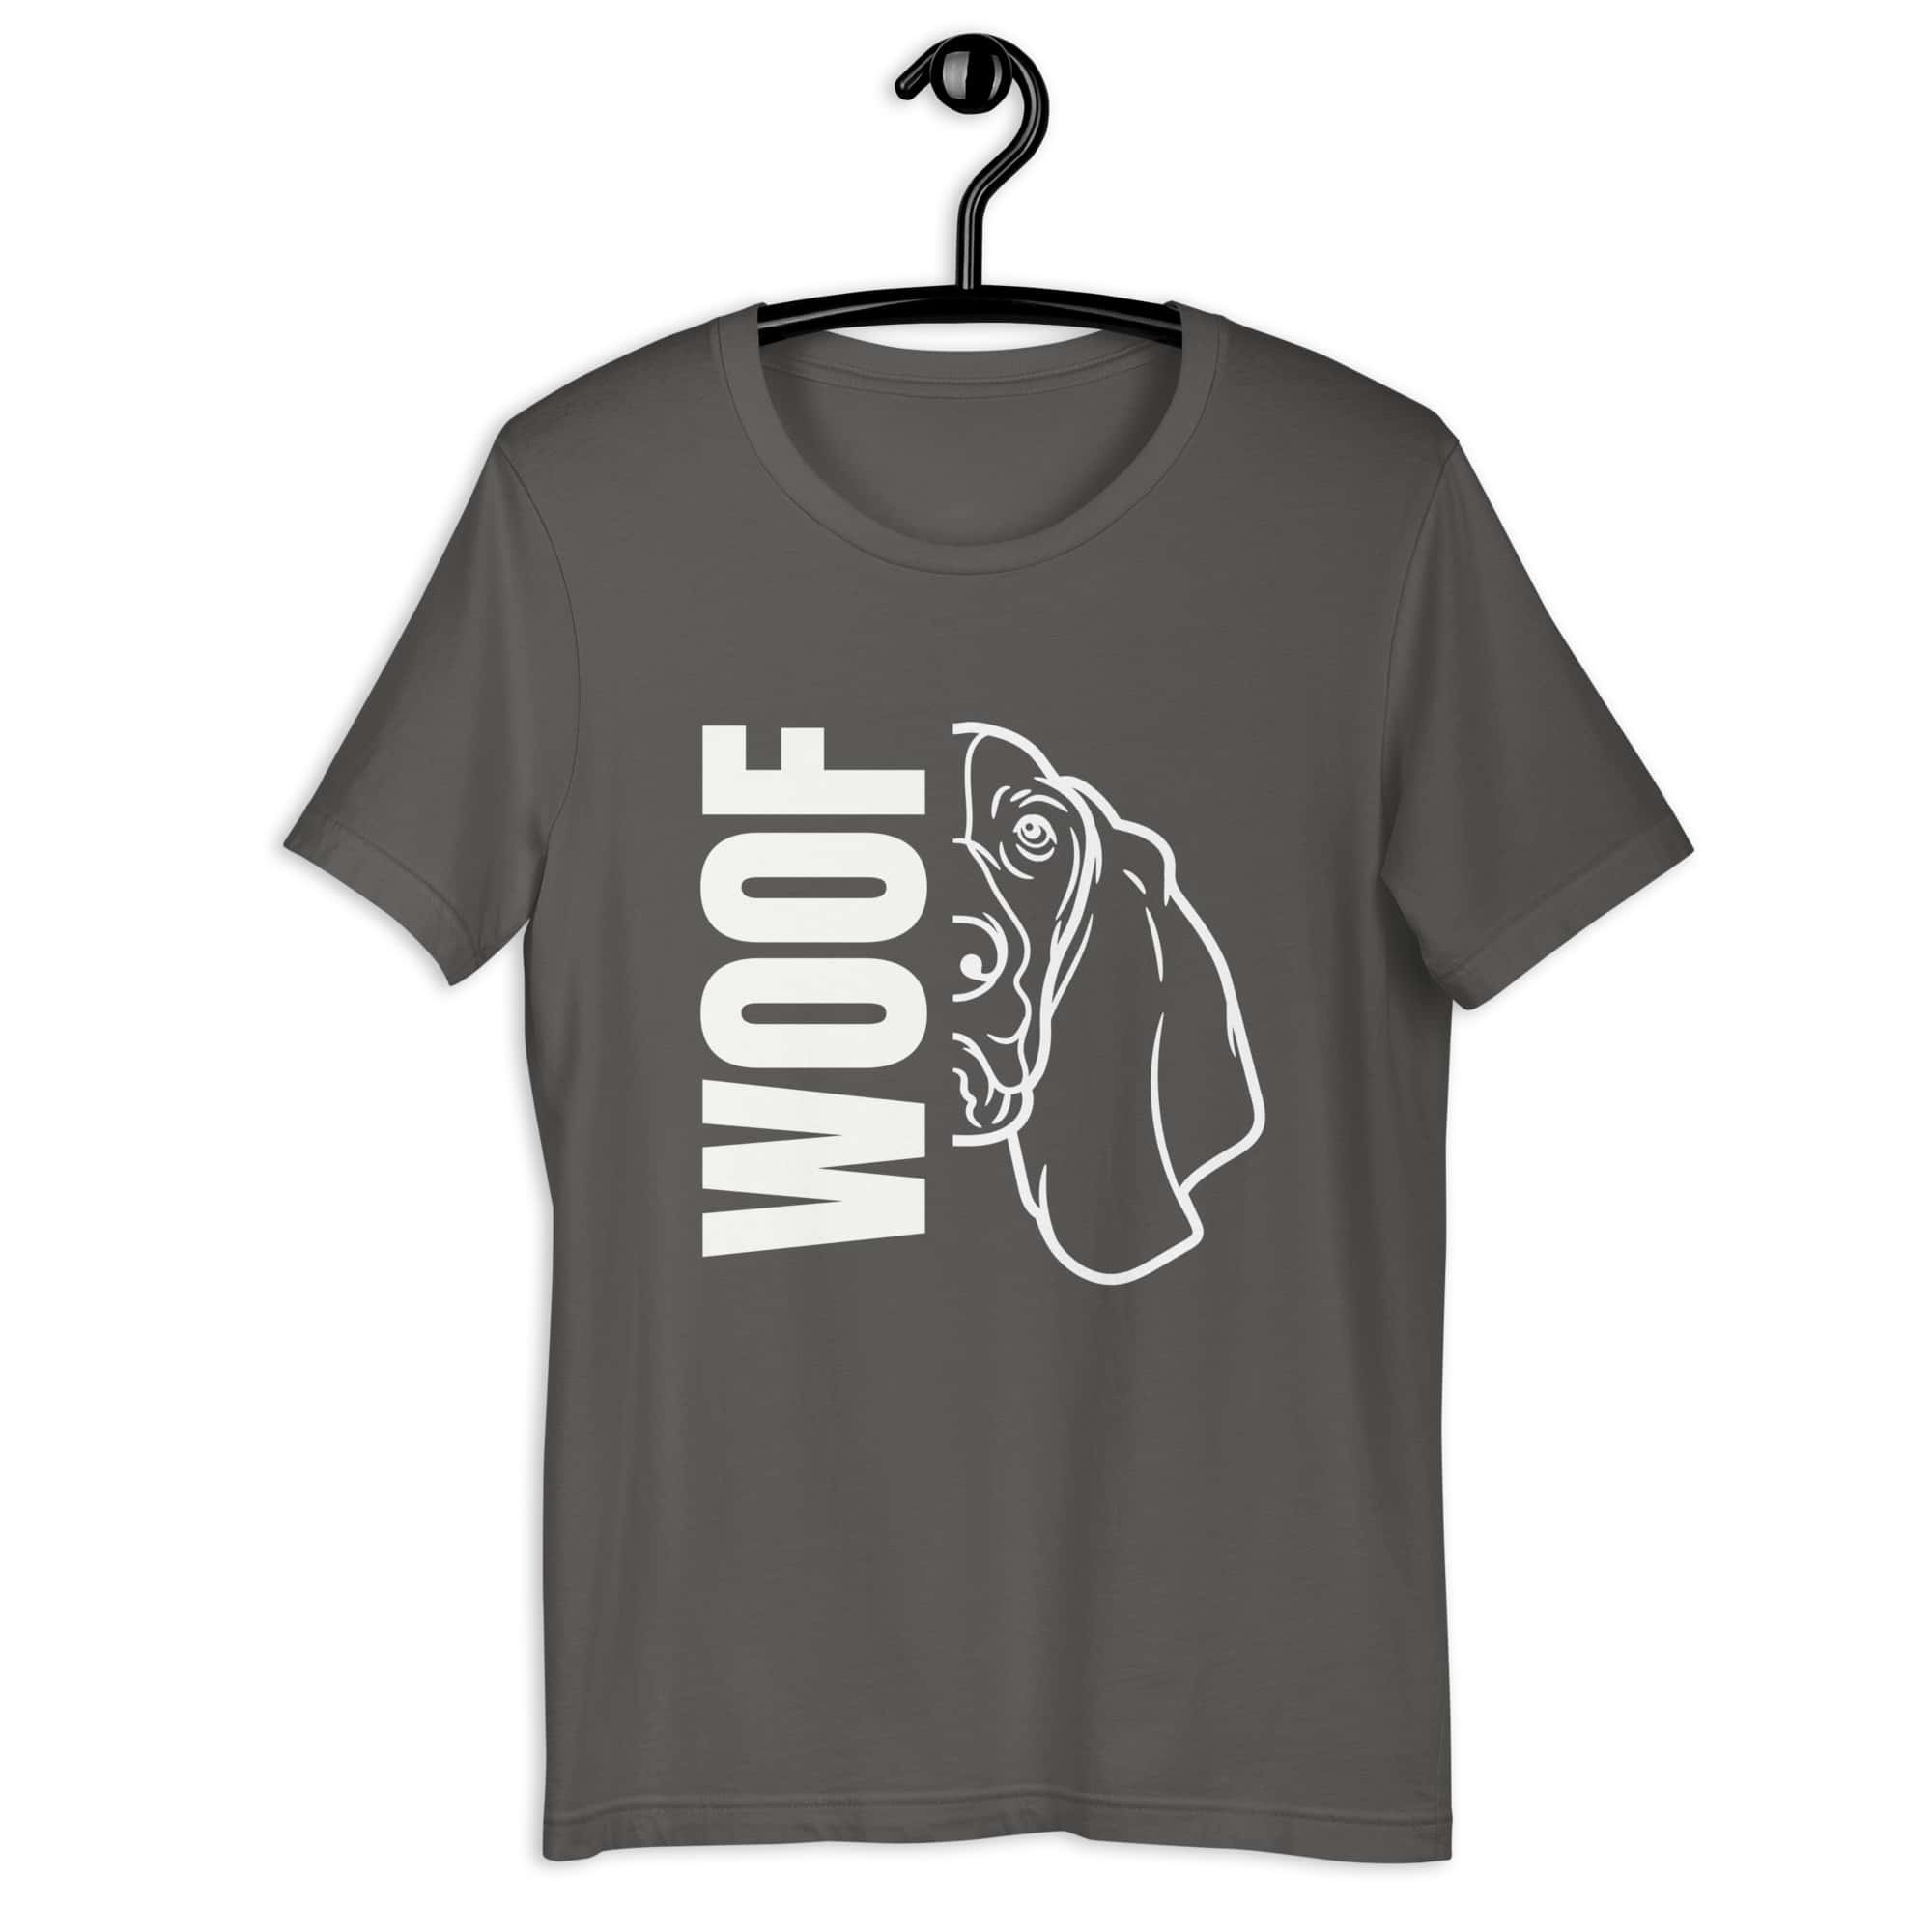 Woof Basset Hound Unisex T-Shirt gray